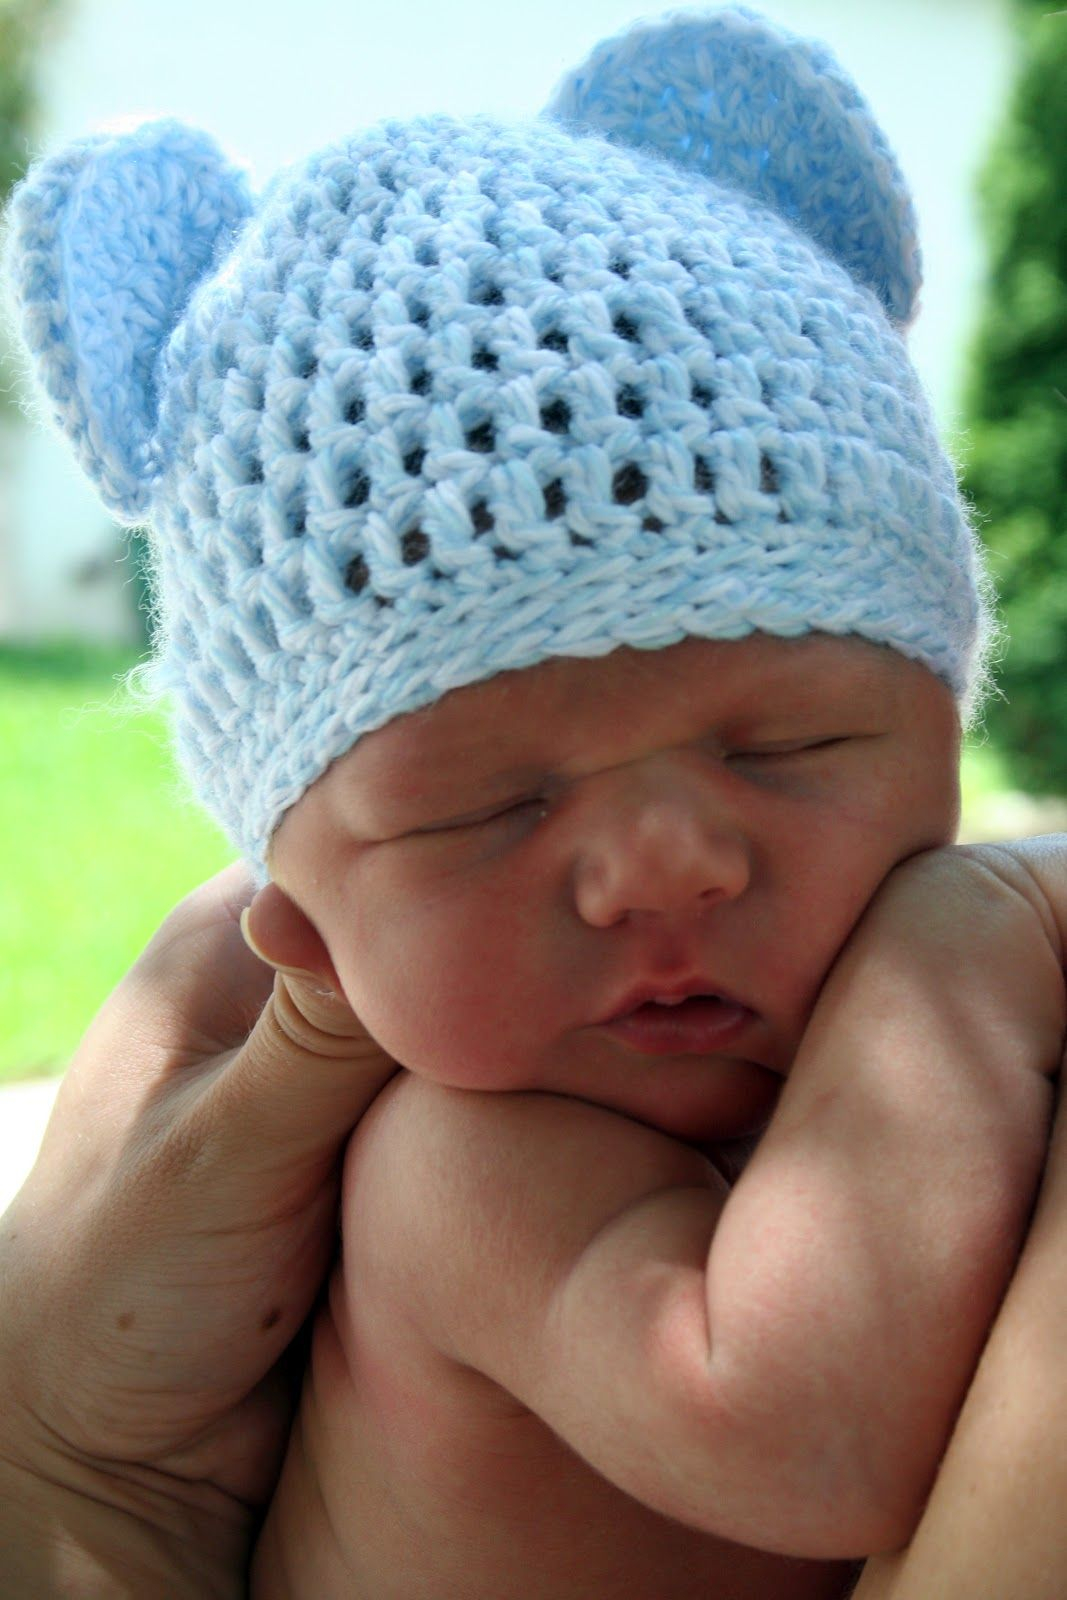 Baby Boy Crochet Hats Free Pattern Newborn Crochet Hats For Boys The Free Pattern For This Hat Is